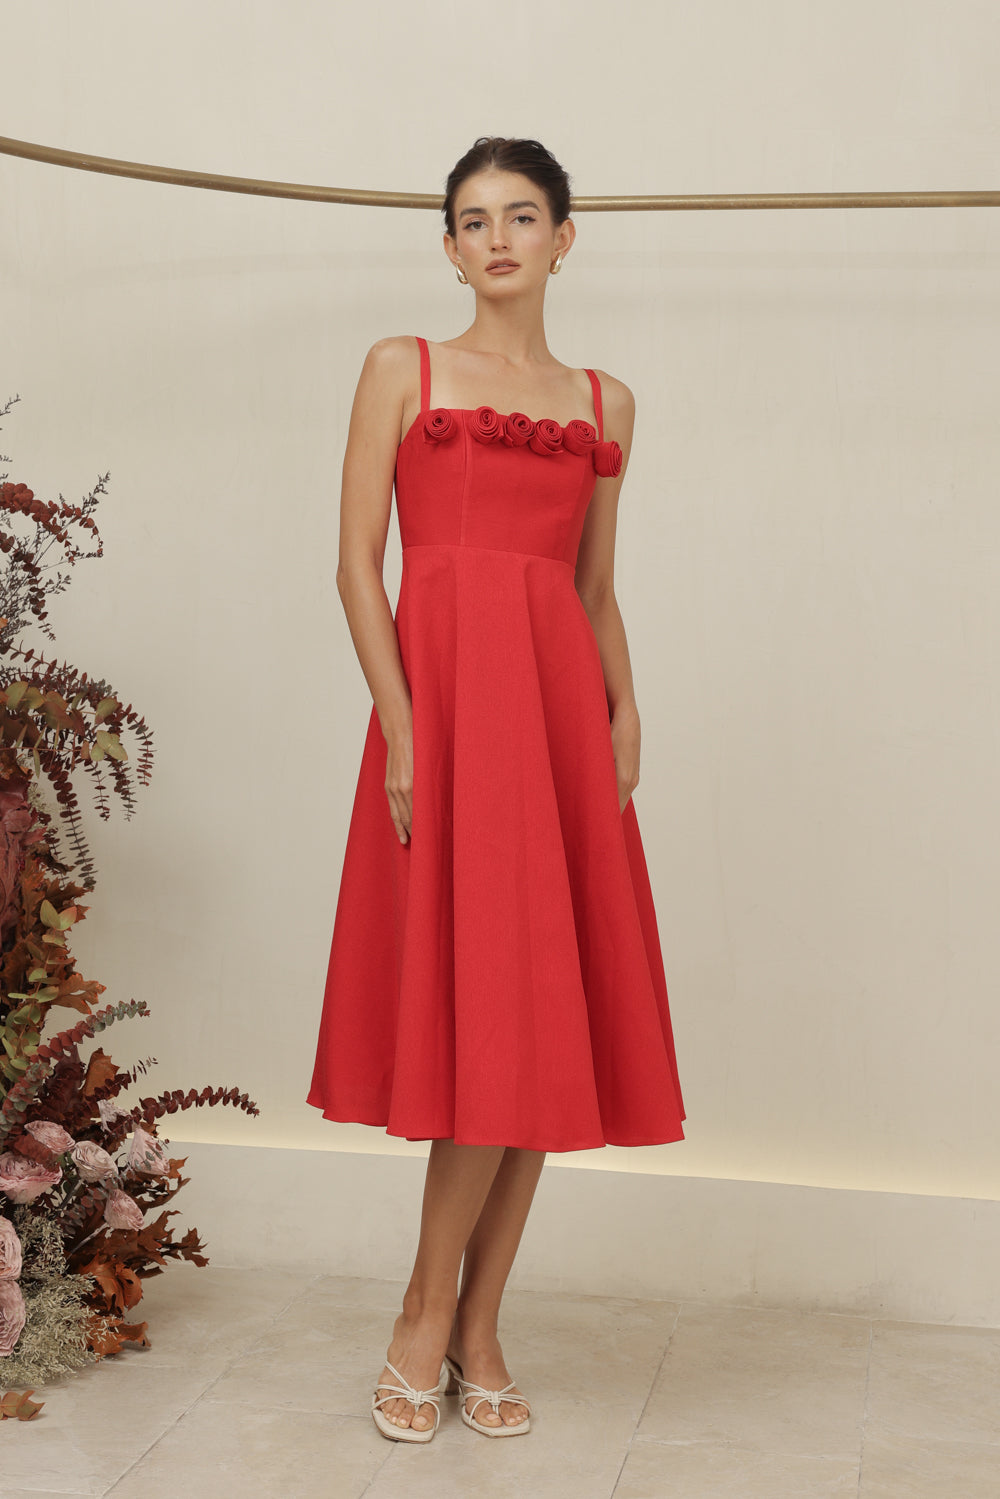 MORGANA DRESS Straight Neckline Strappy Midi Dress with Floral Details (Red Gazaar)